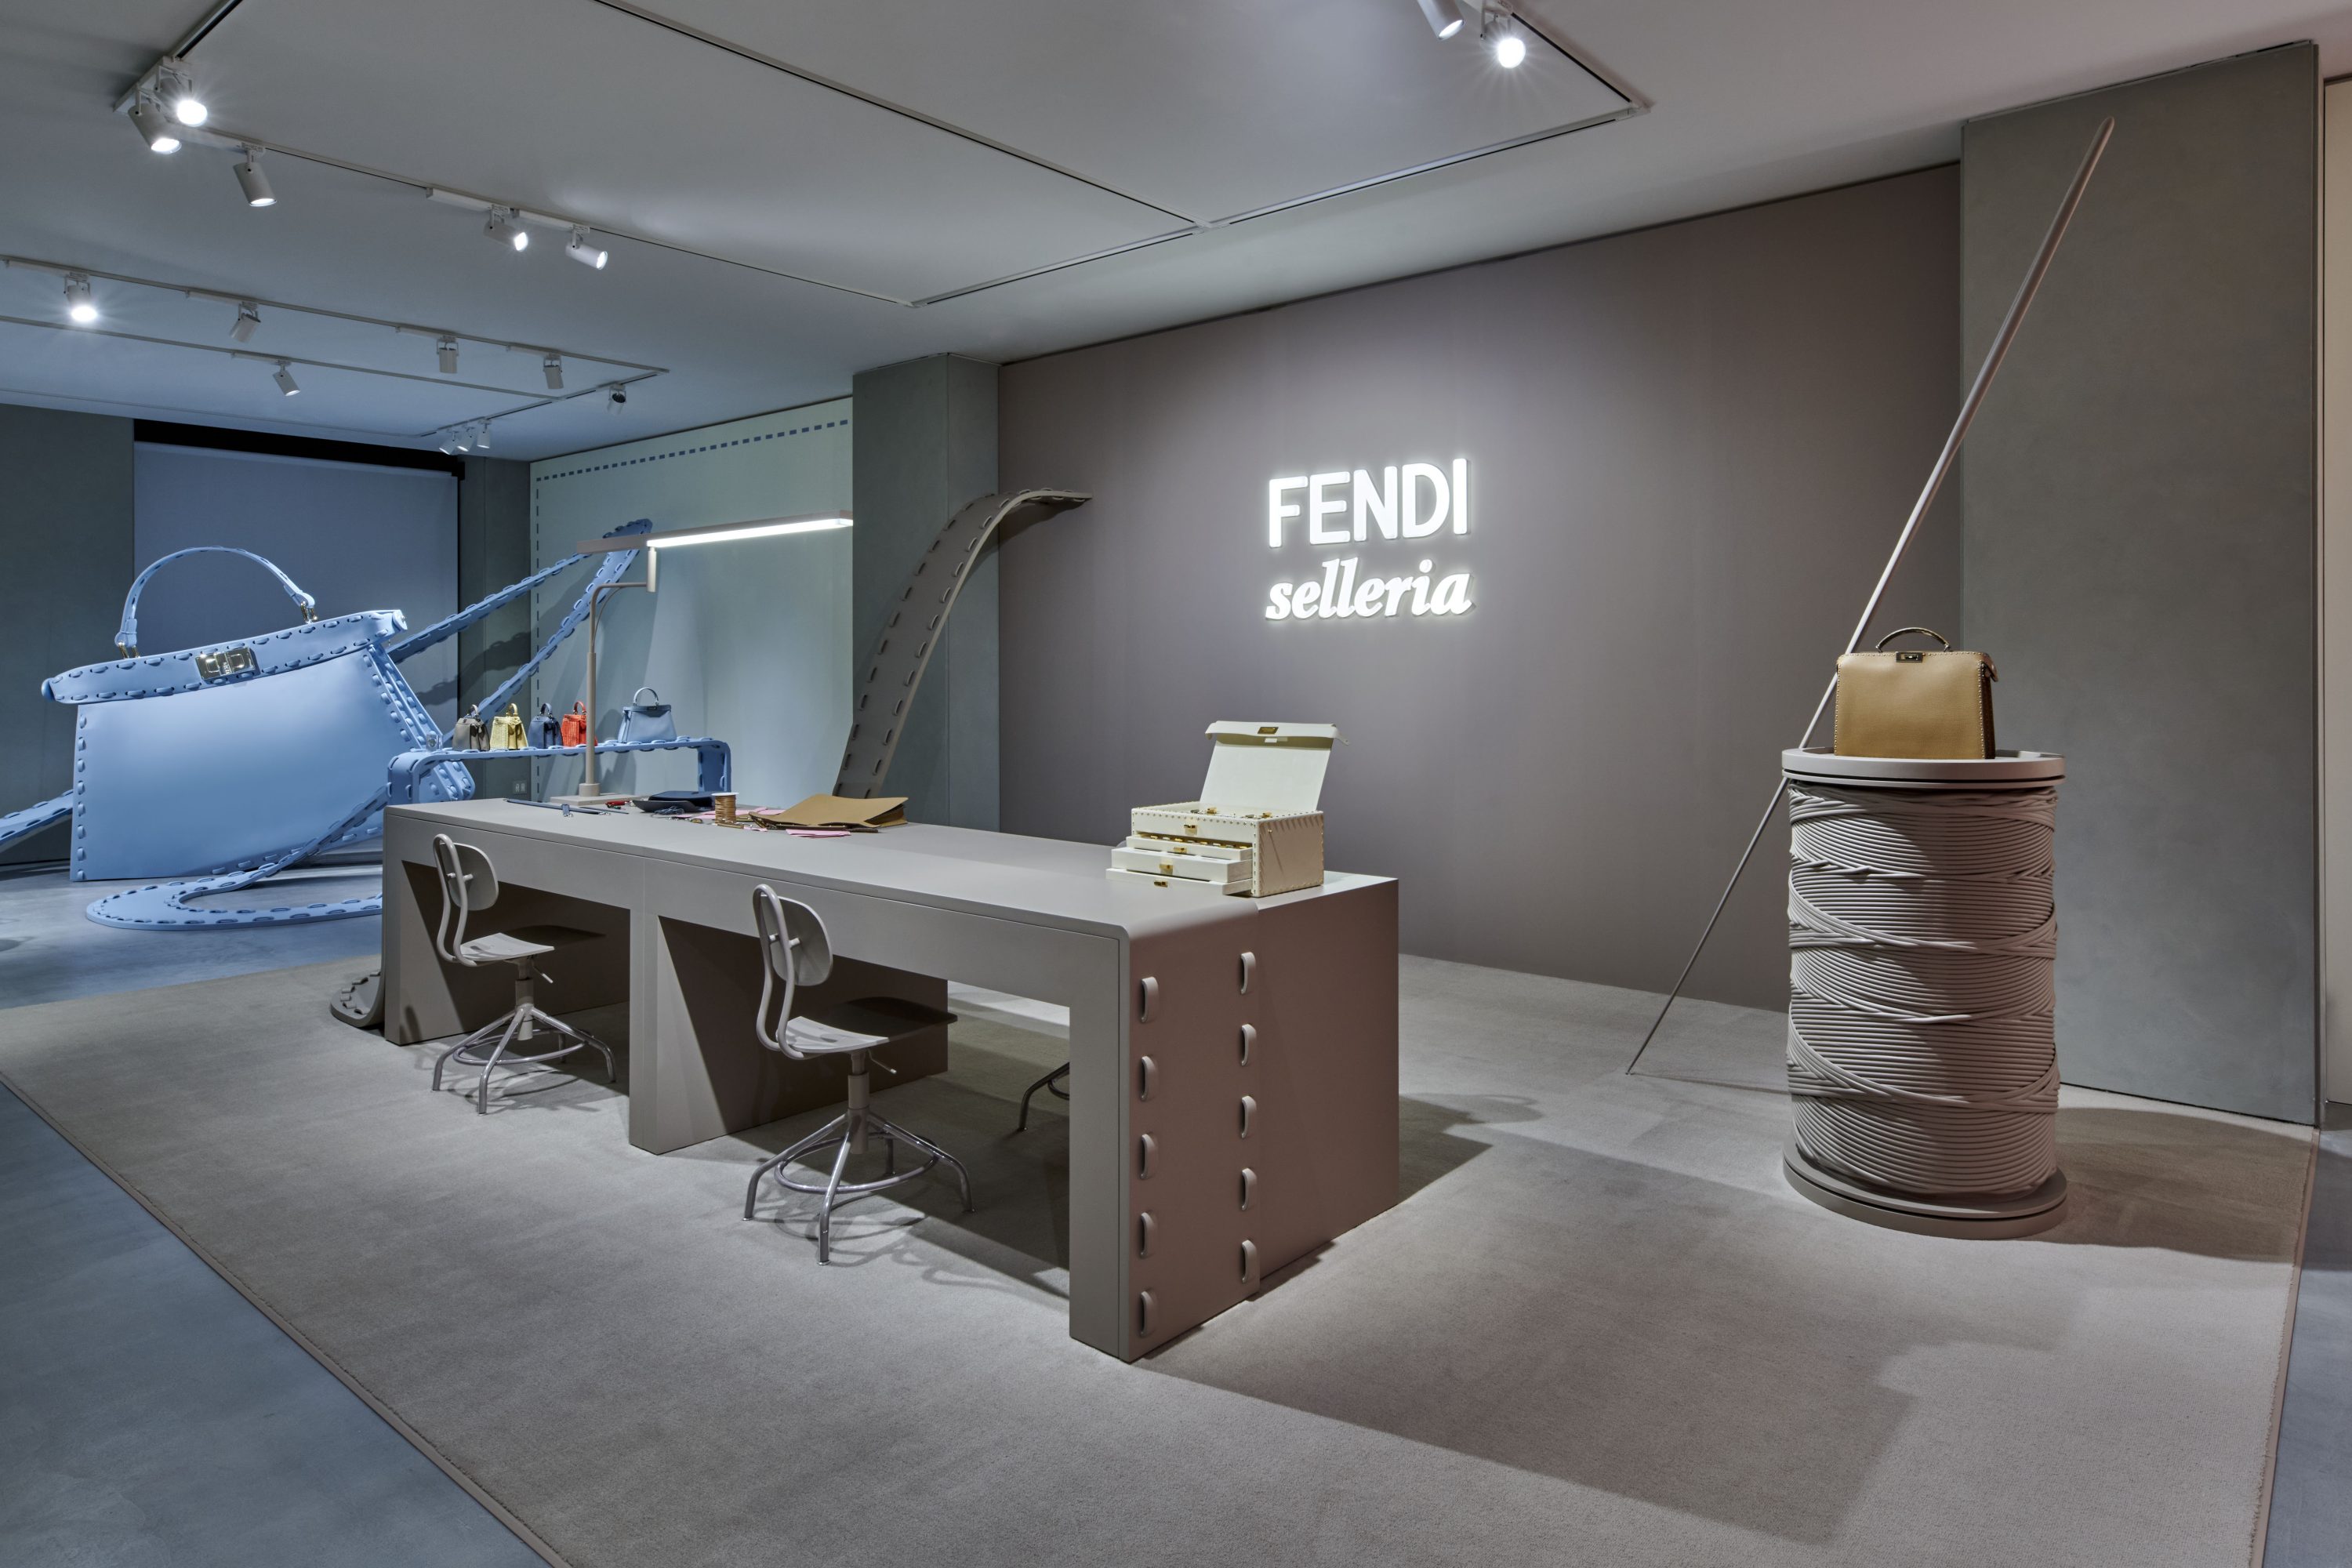 Fendi Opens Immersive Selleria Pop-Up in Tokyo